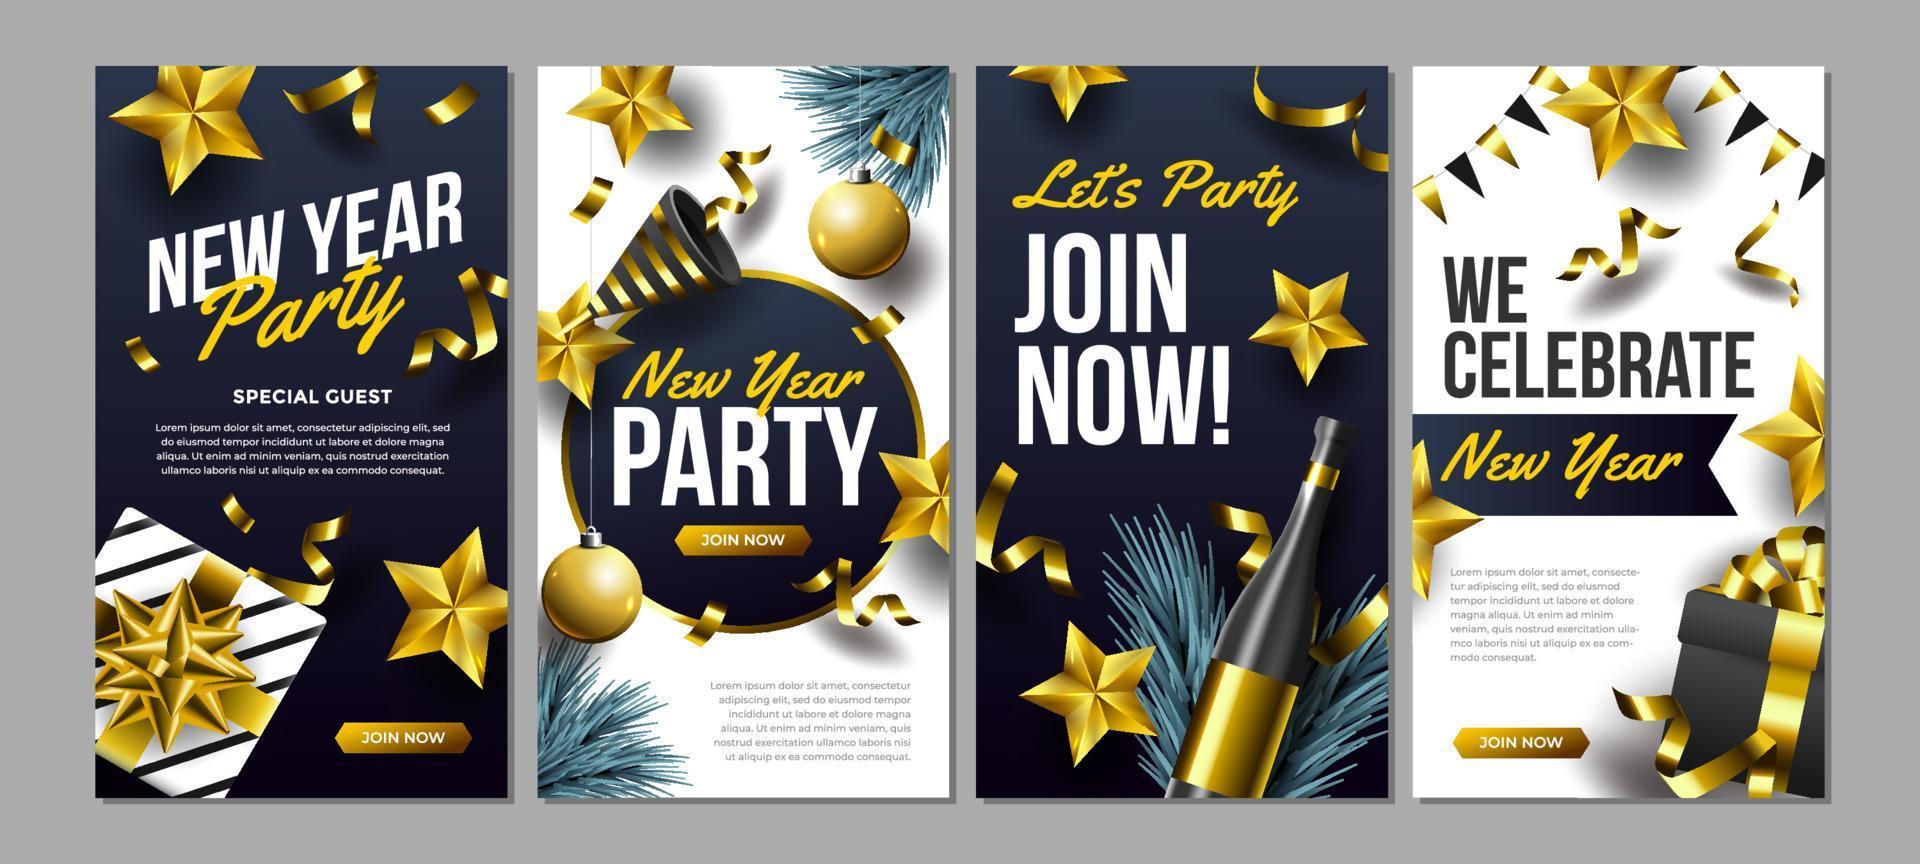 New Year Party Social Media vector